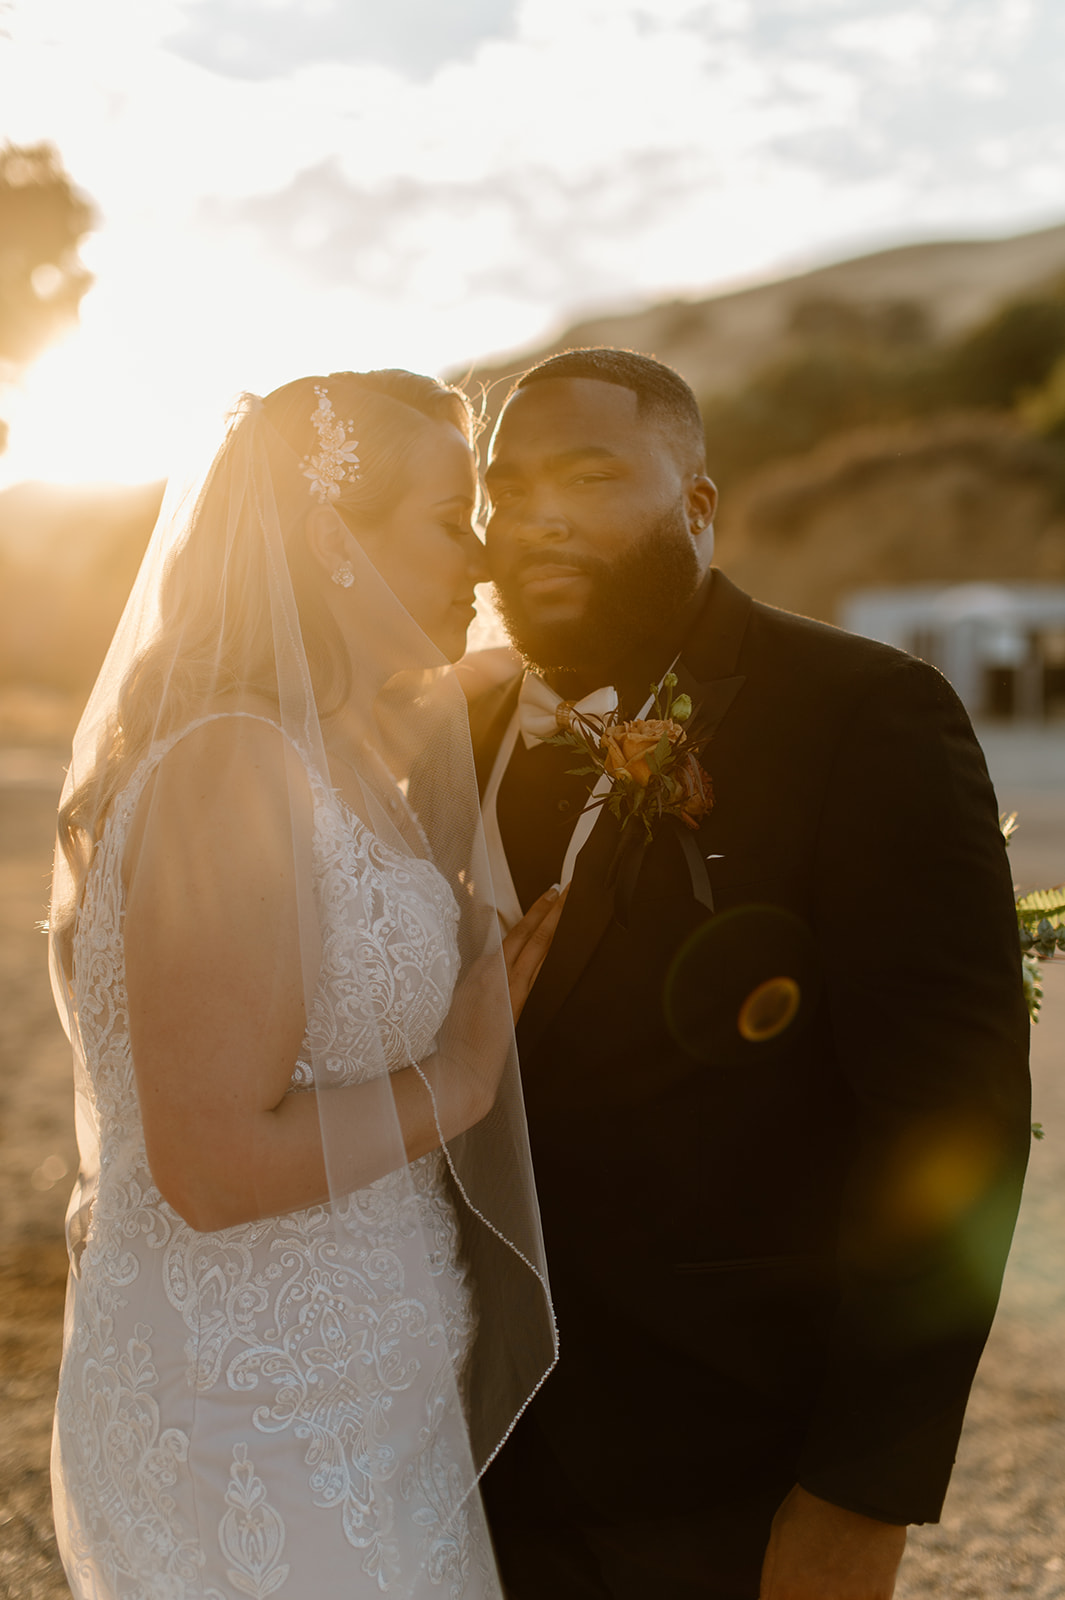 Sydney Jai Photography - Sunol valley wedding photography,  northern california photographer, bride and groom photos, golden hour wedding photos